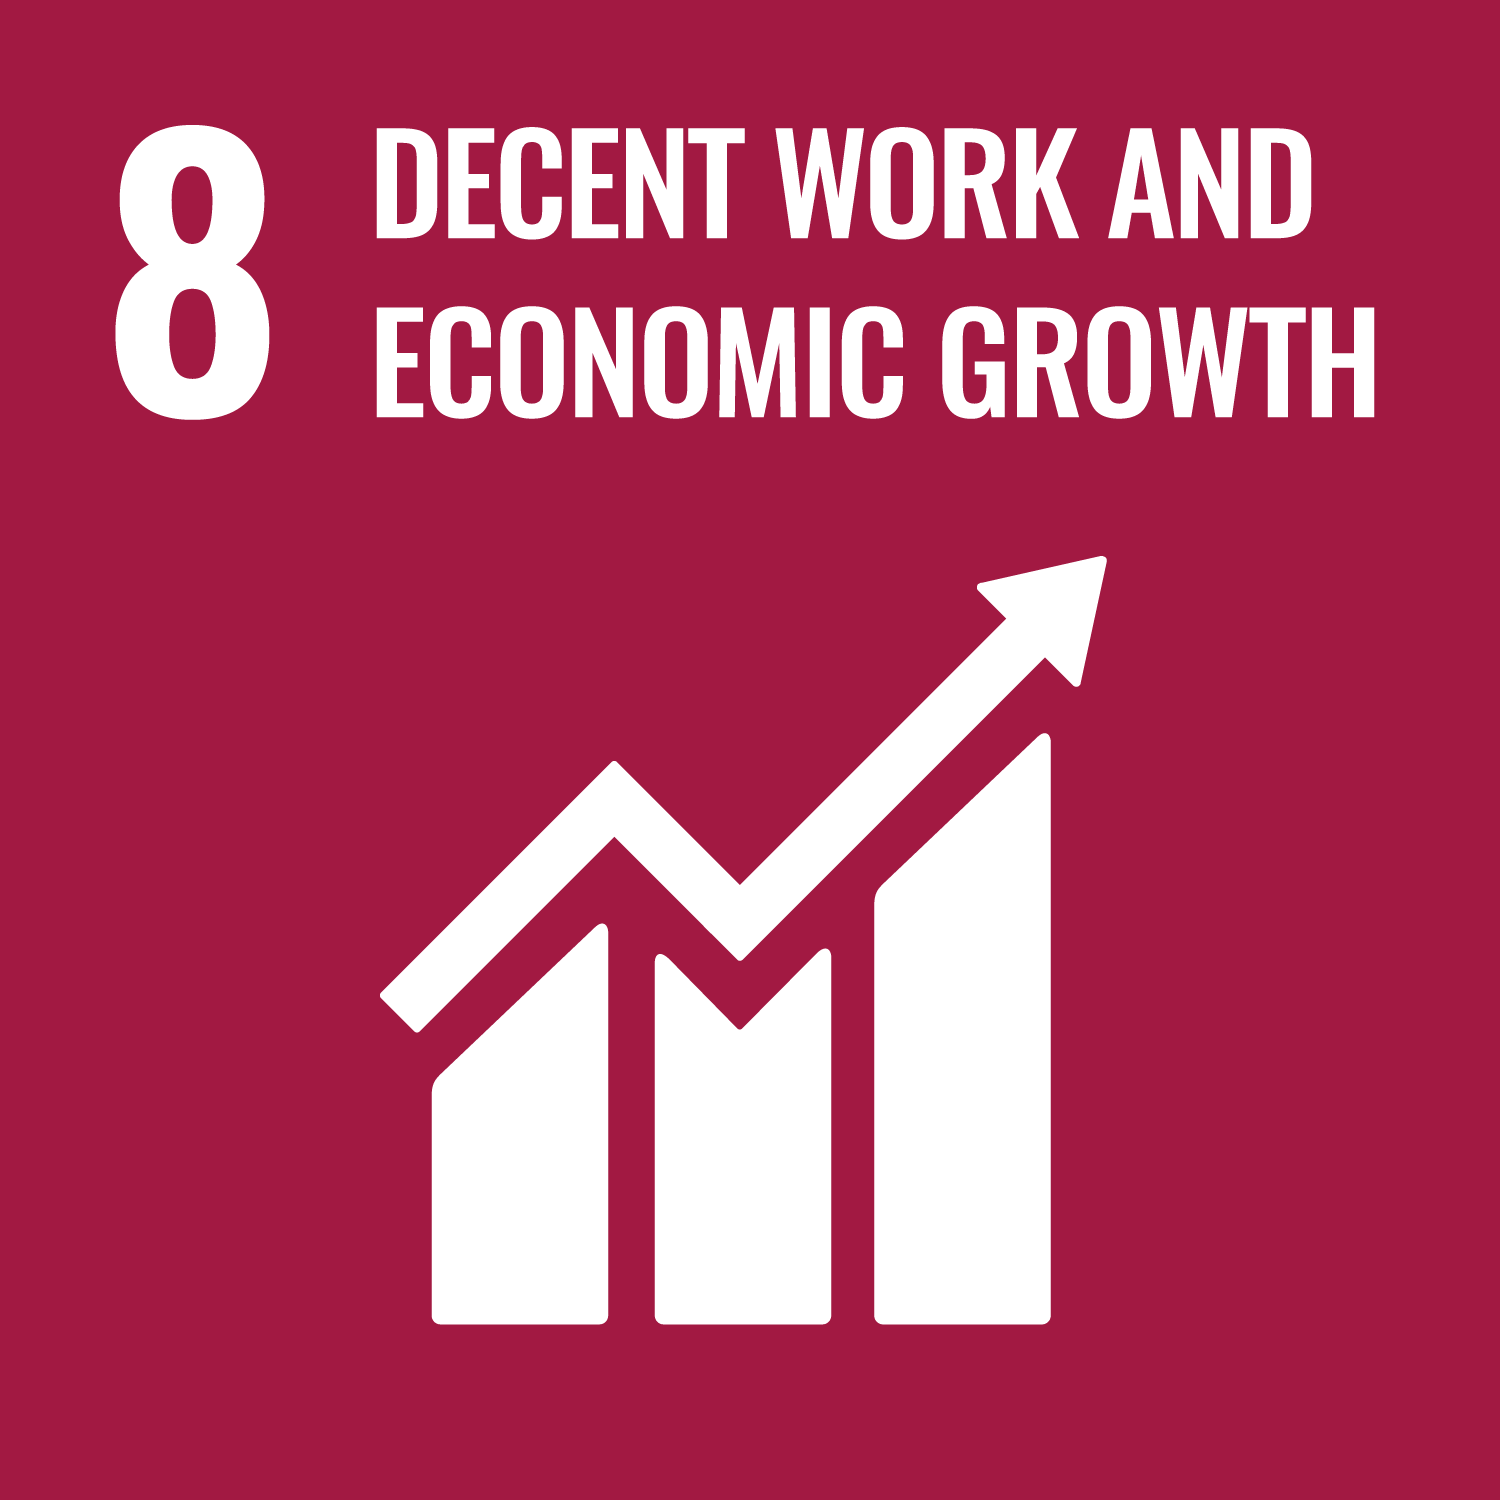 SDG 8. Decent work and economic growth